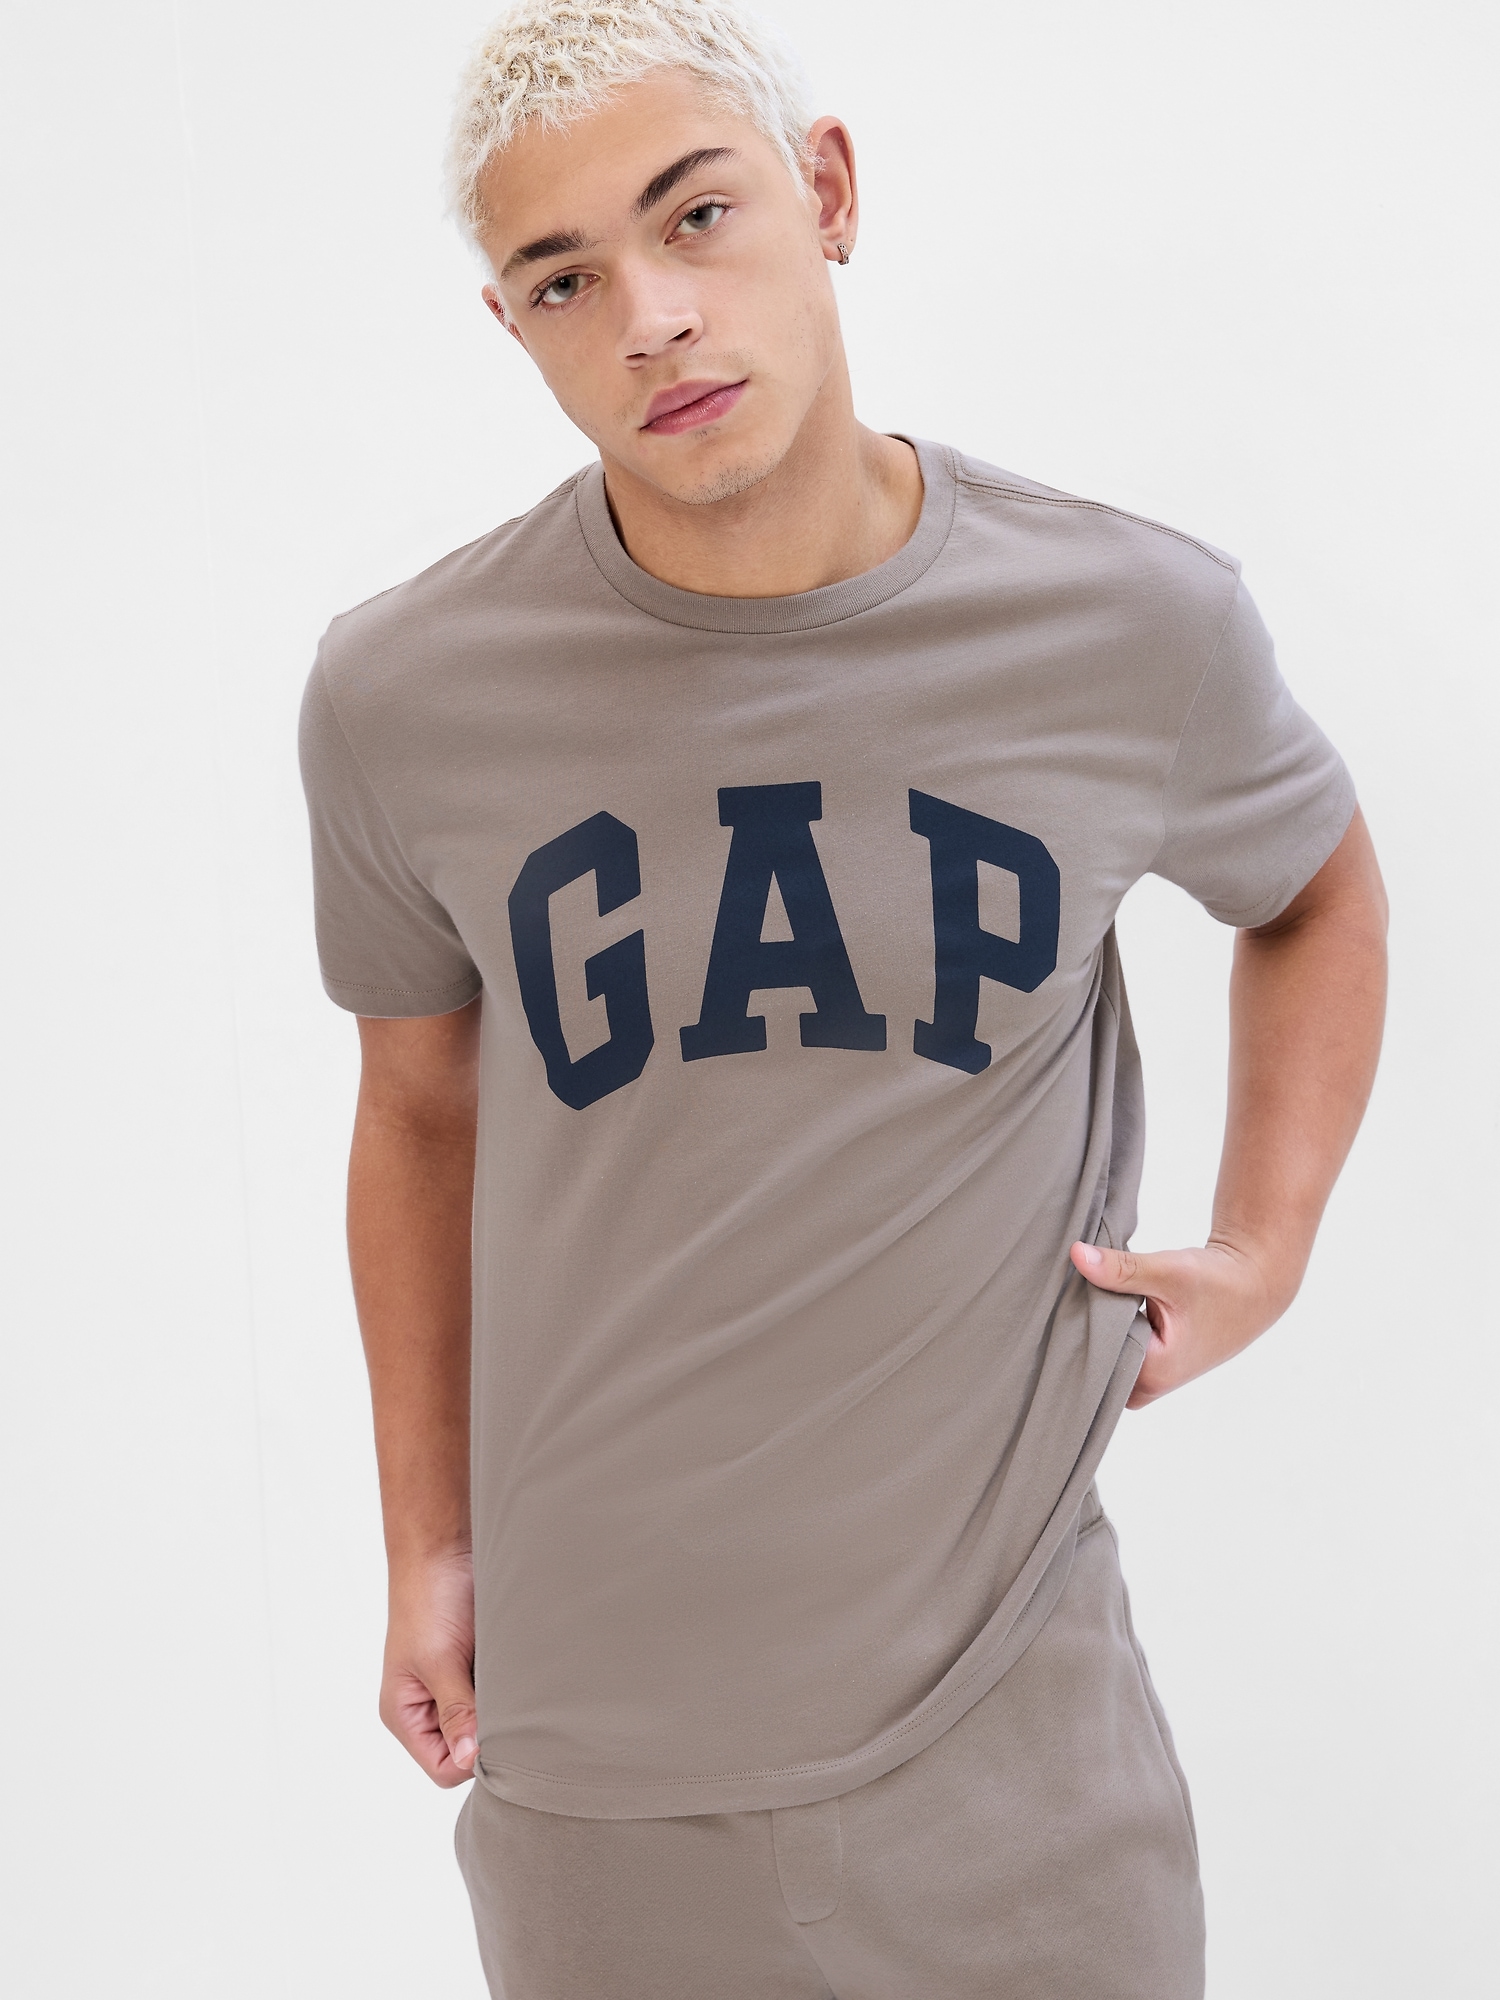 flour Raincoat Begging Gap Logo T-Shirt | Gap Factory